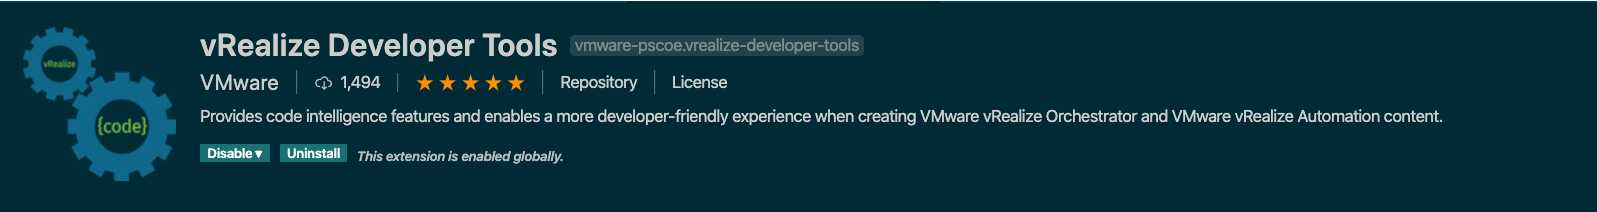 vRealize Developer Tools